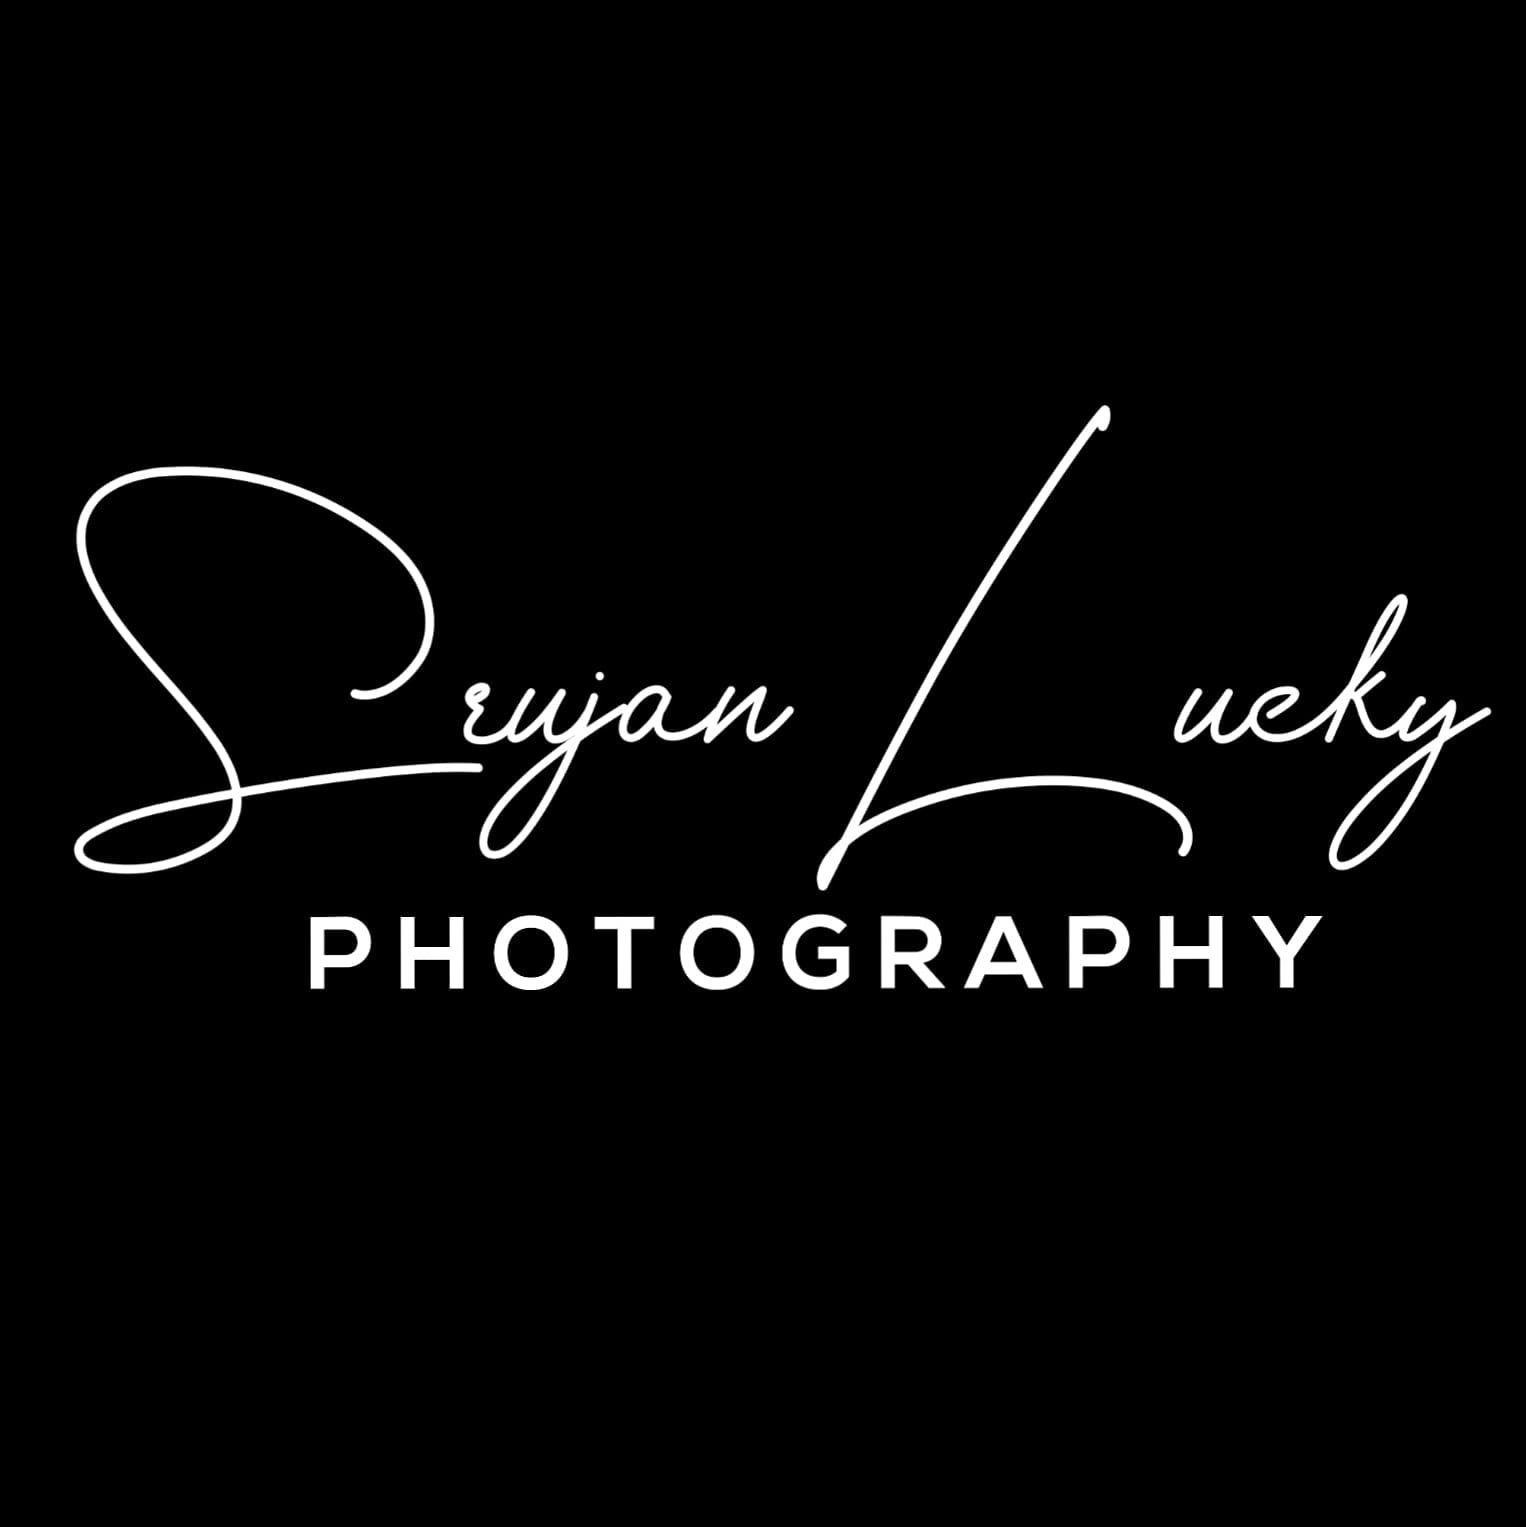 Srujan Lucky Photography